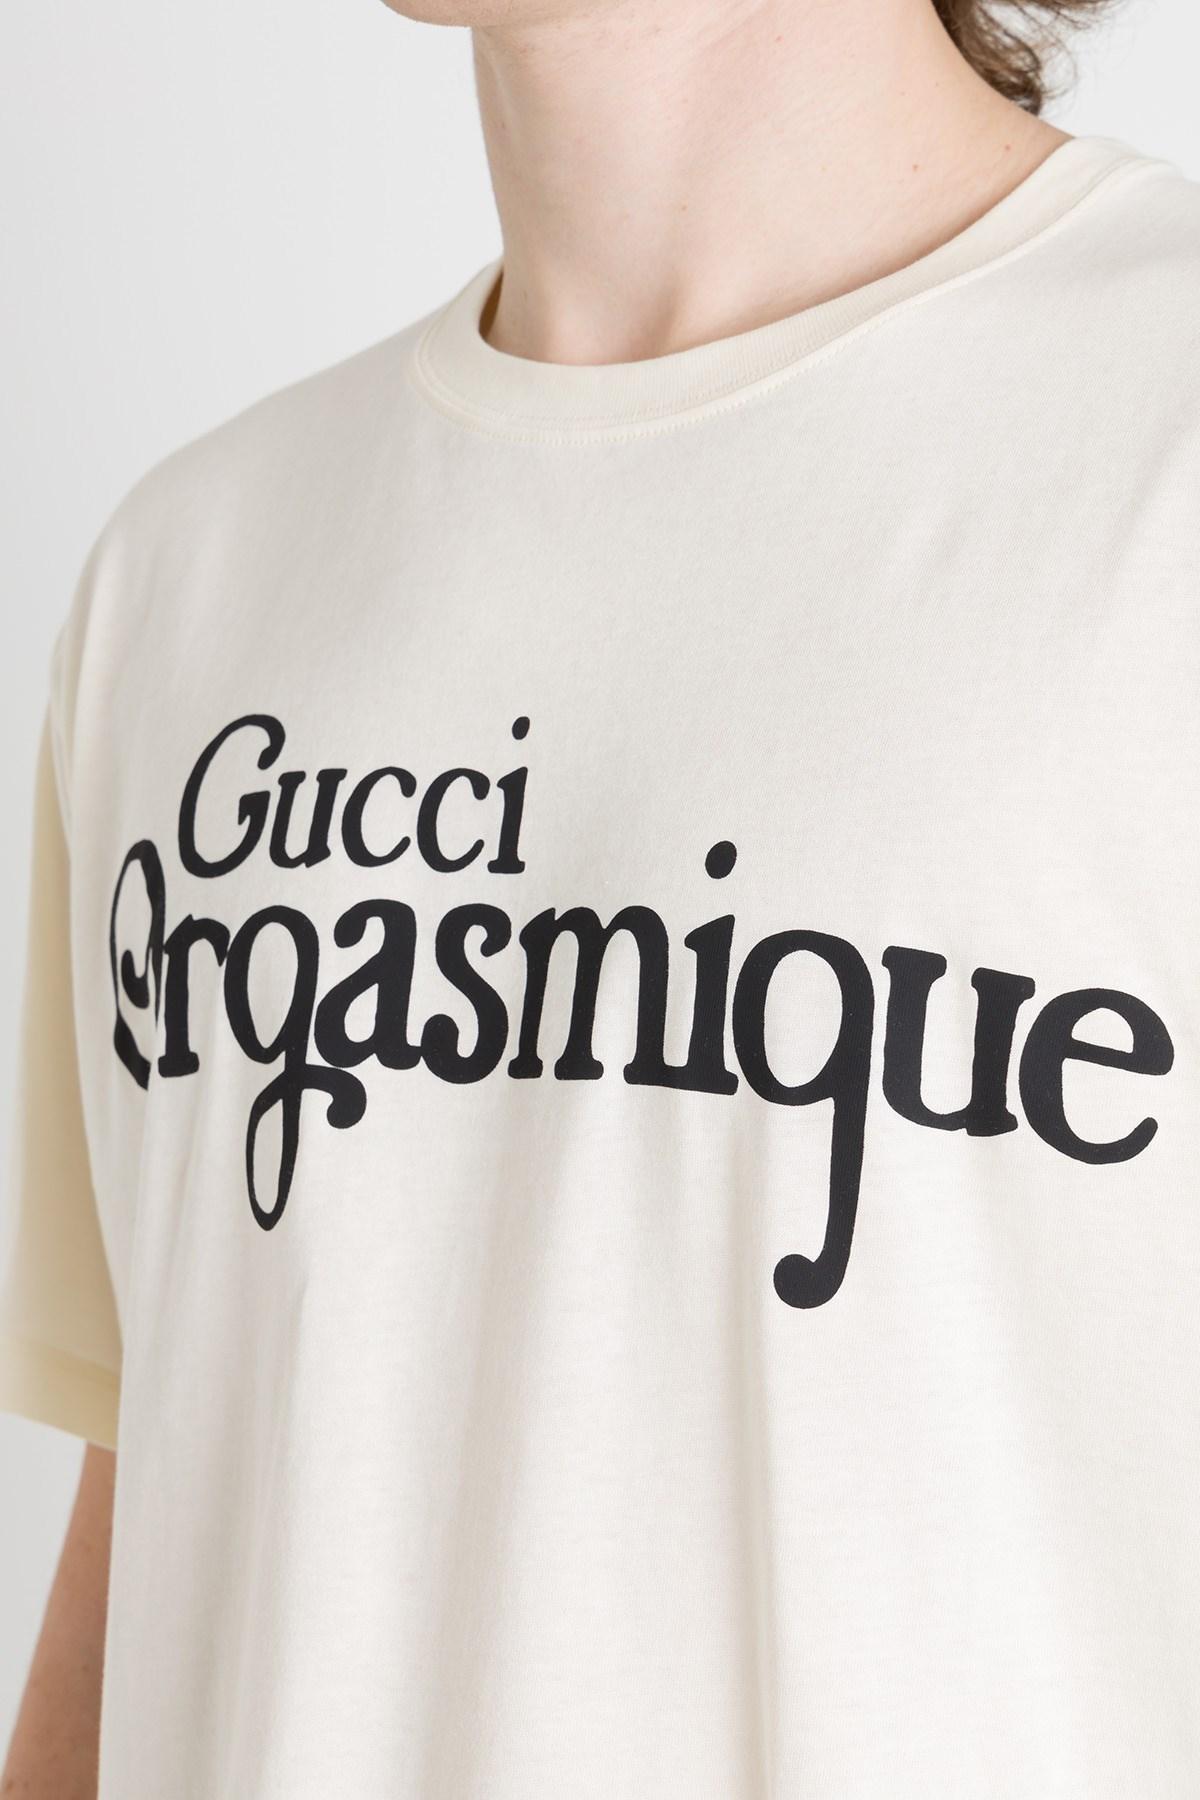 Gucci Orgasmic T-shirt for Men | Lyst